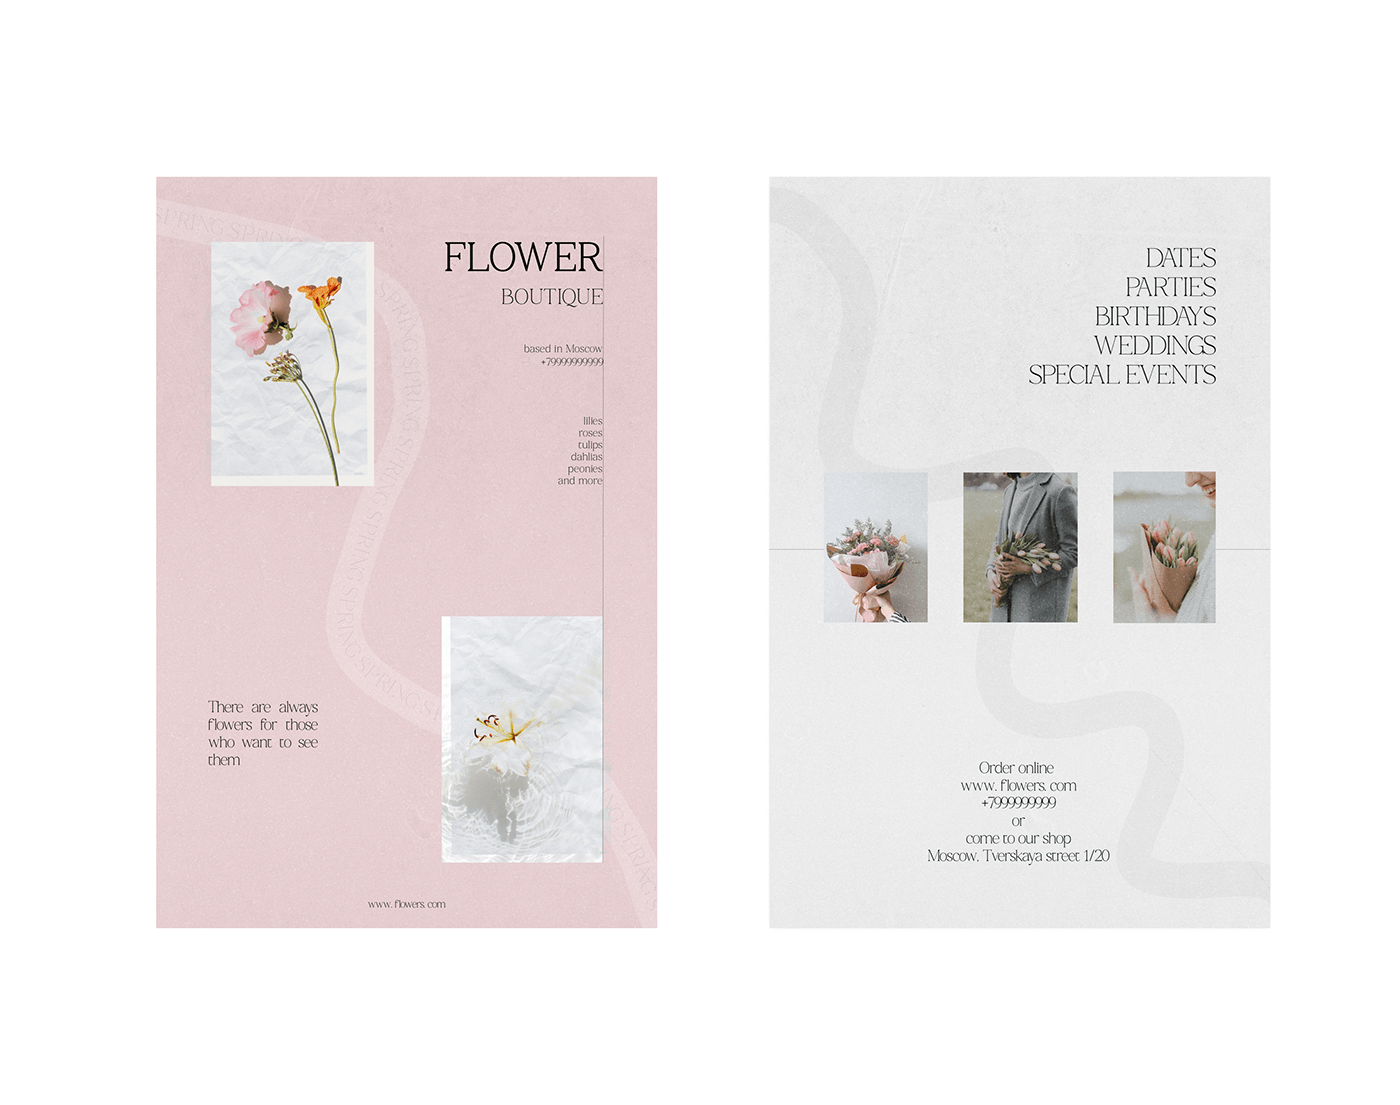 design Graphic Designer brand identity poster плакат флаер цветочный магазин дизайн графический дизайн веб-дизайн